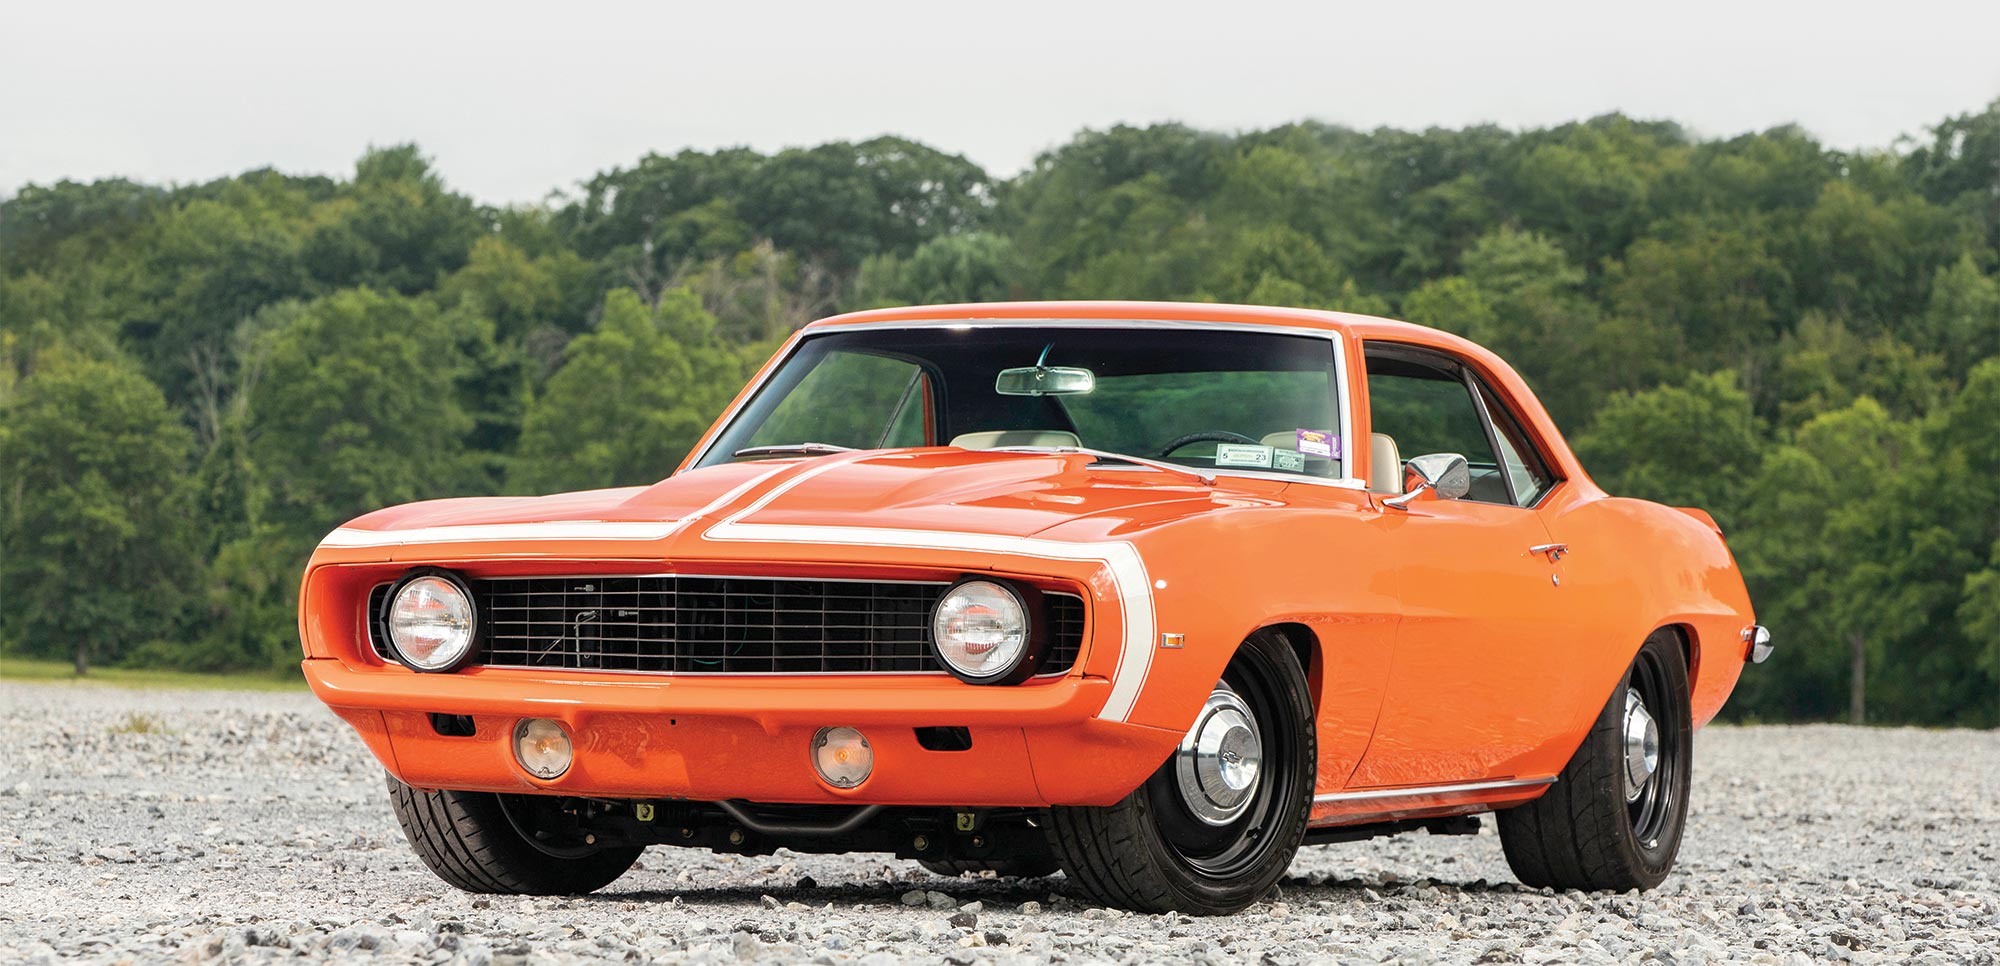 orange '69 Camaro feature image of front view